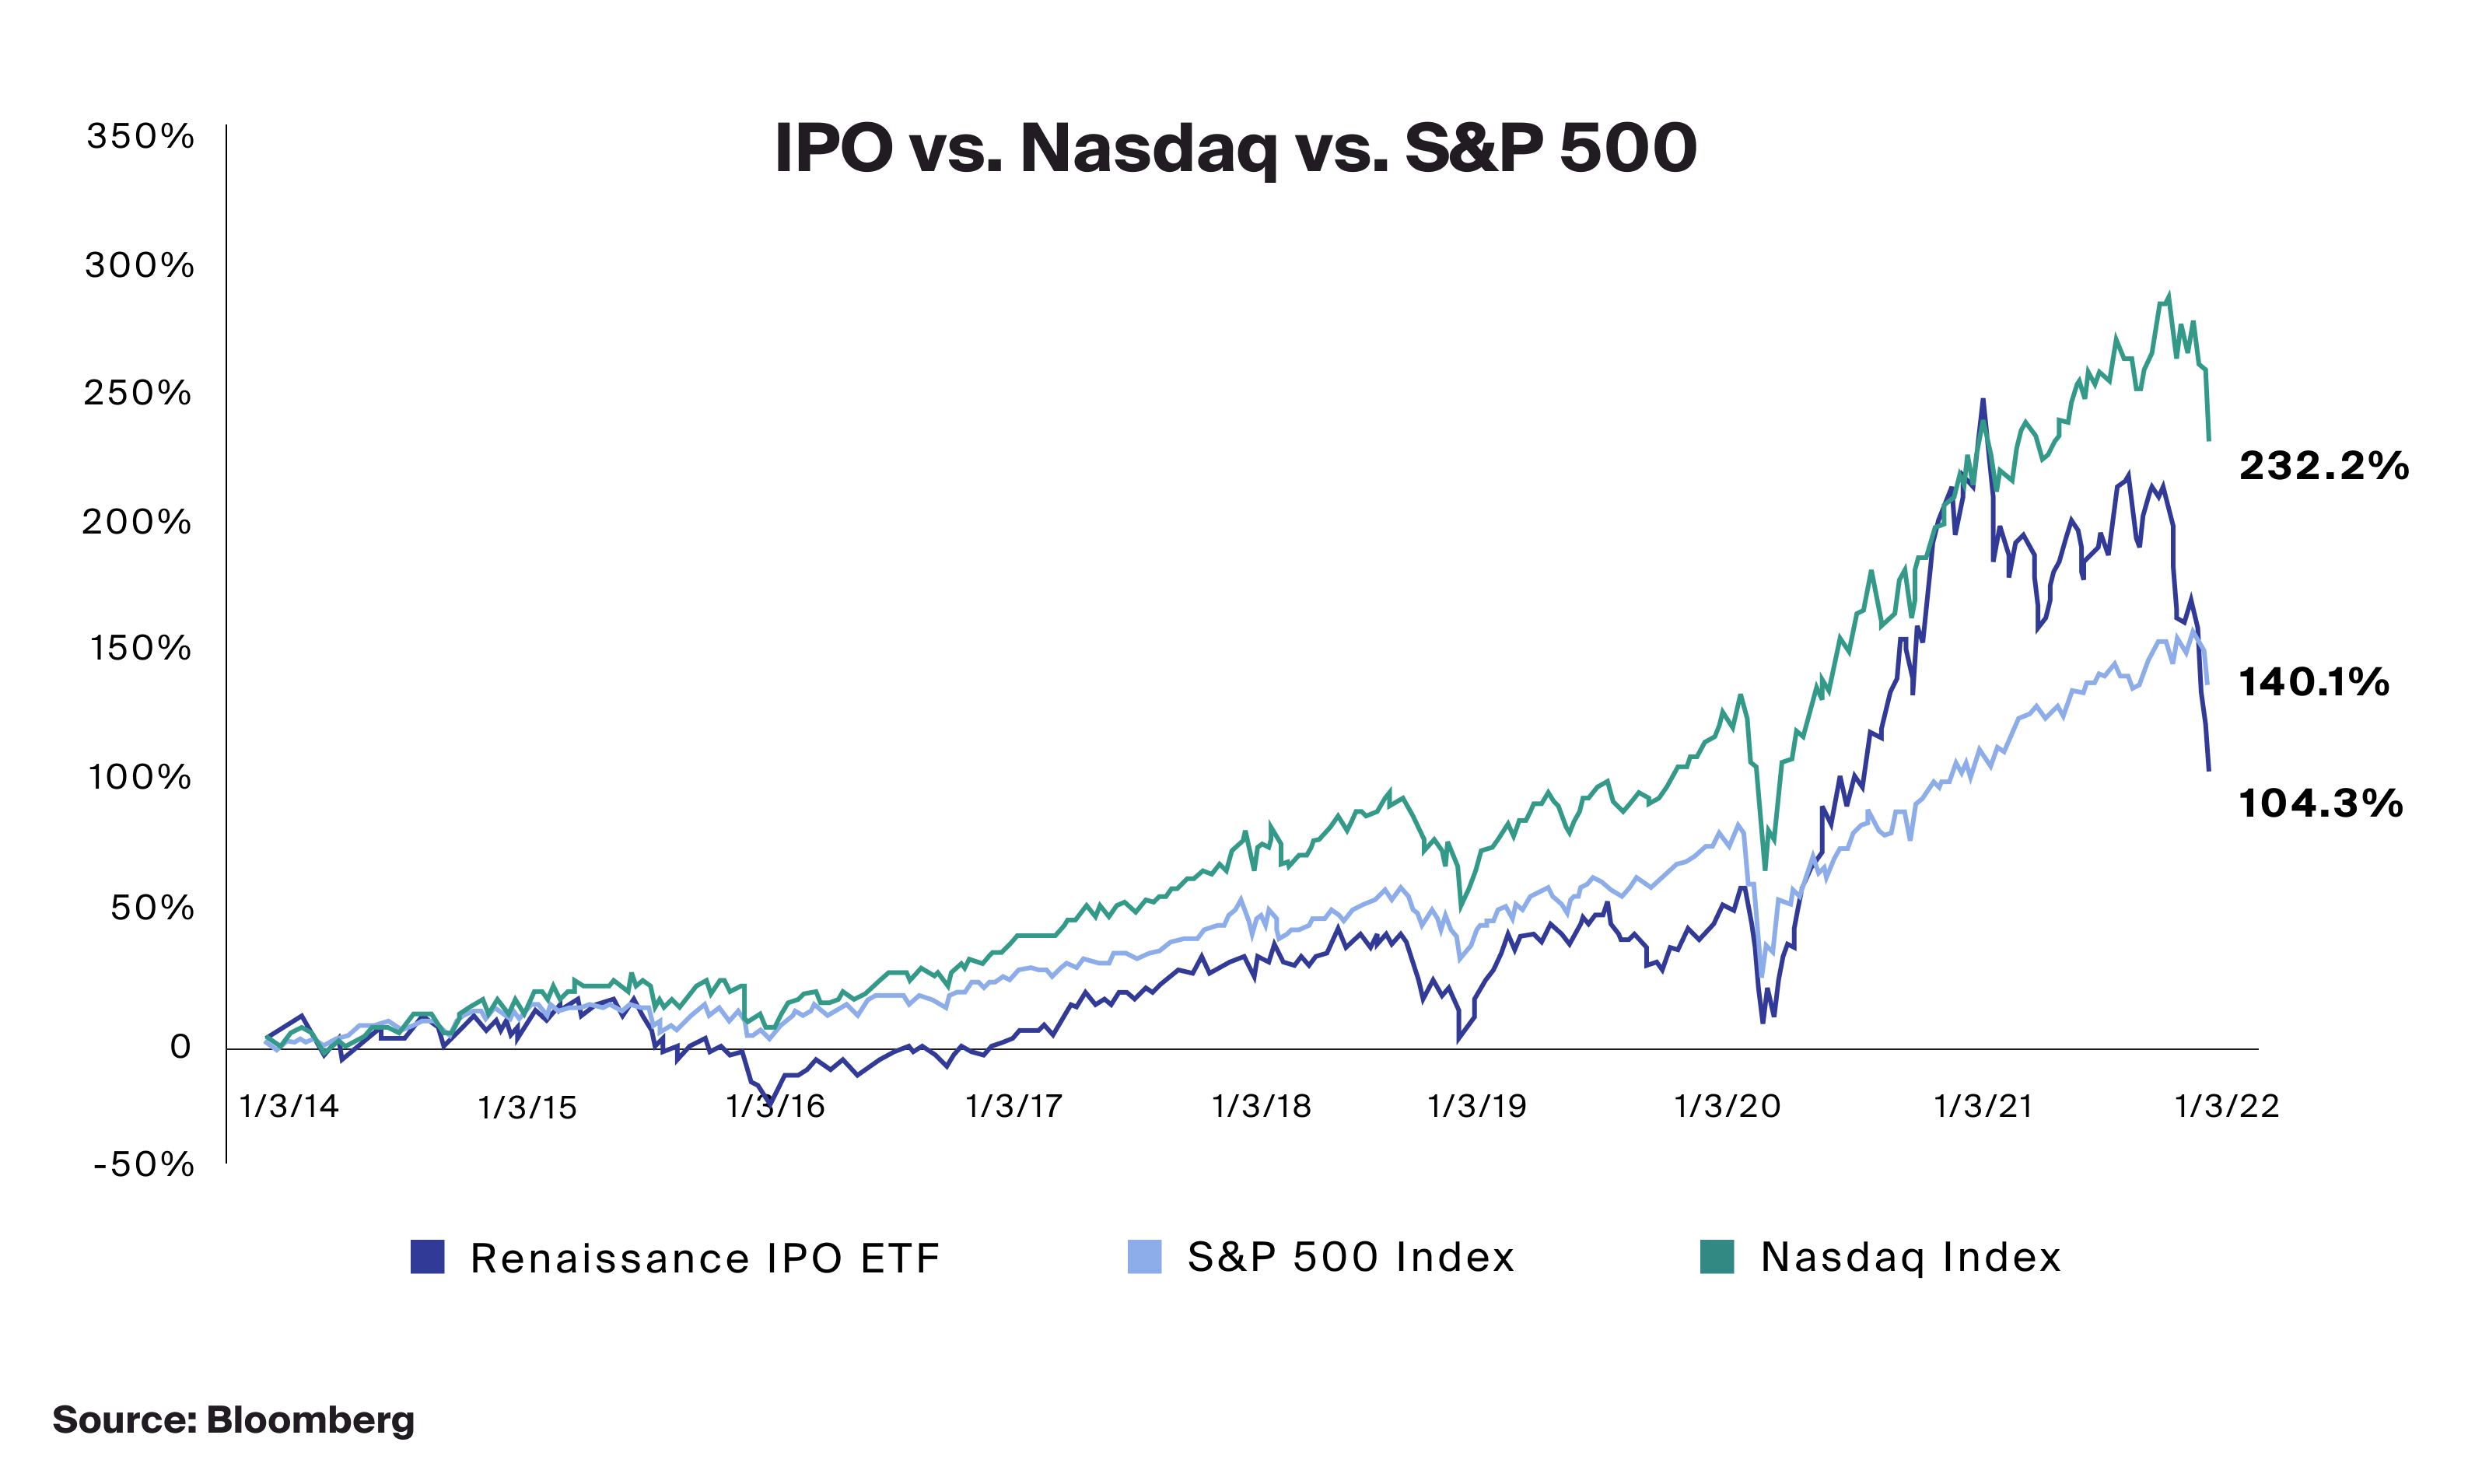 IPO vs. Nasdaq vs. S&P 500